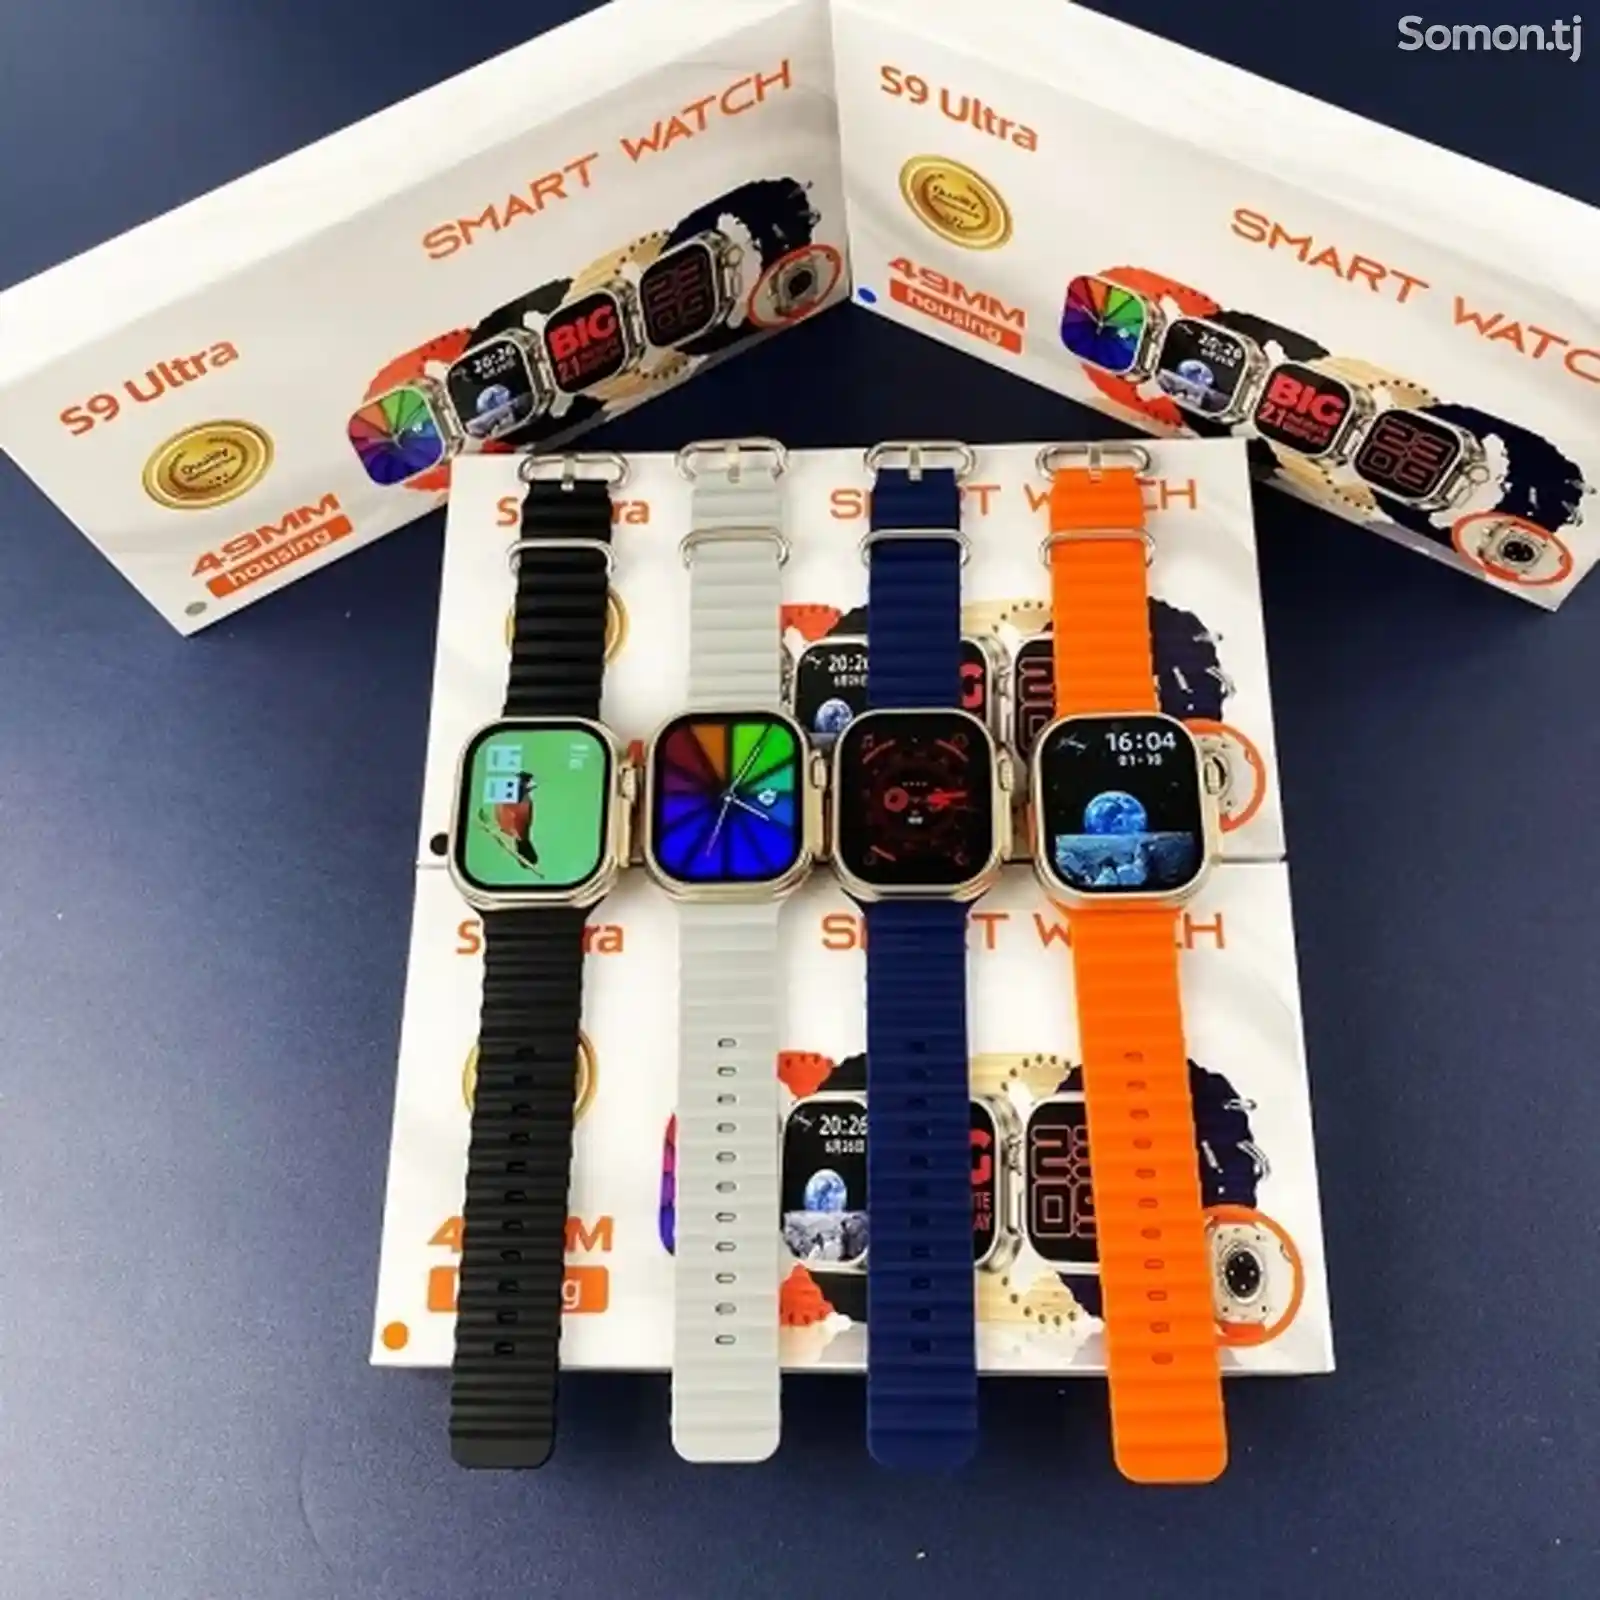 Смарт часы Smart Watch S9 Ultra-1